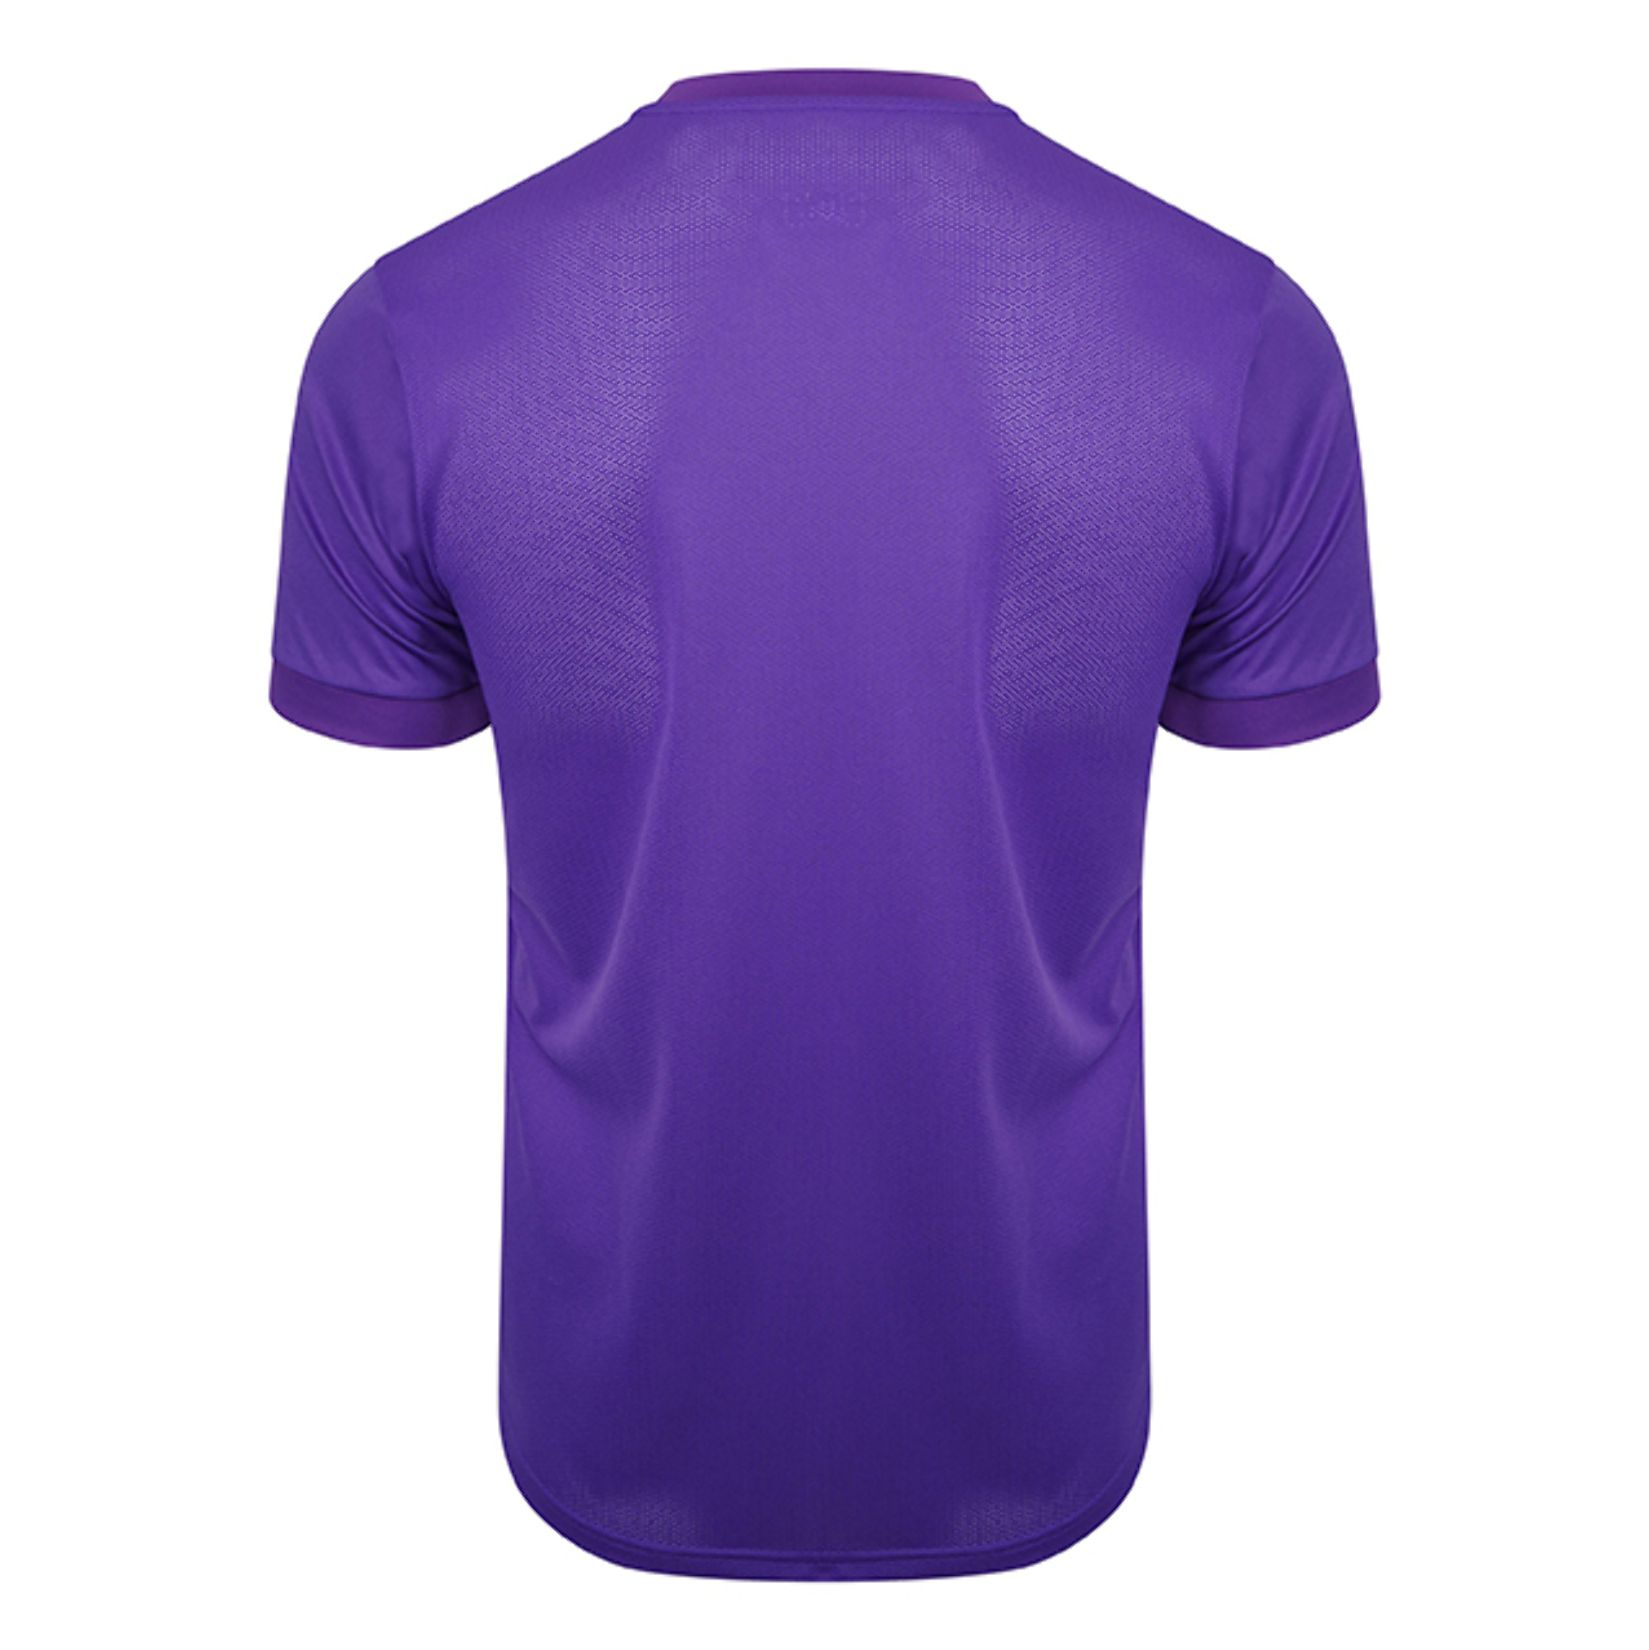 Puma Goal Short Sleeve Jersey - Kitlocker.com